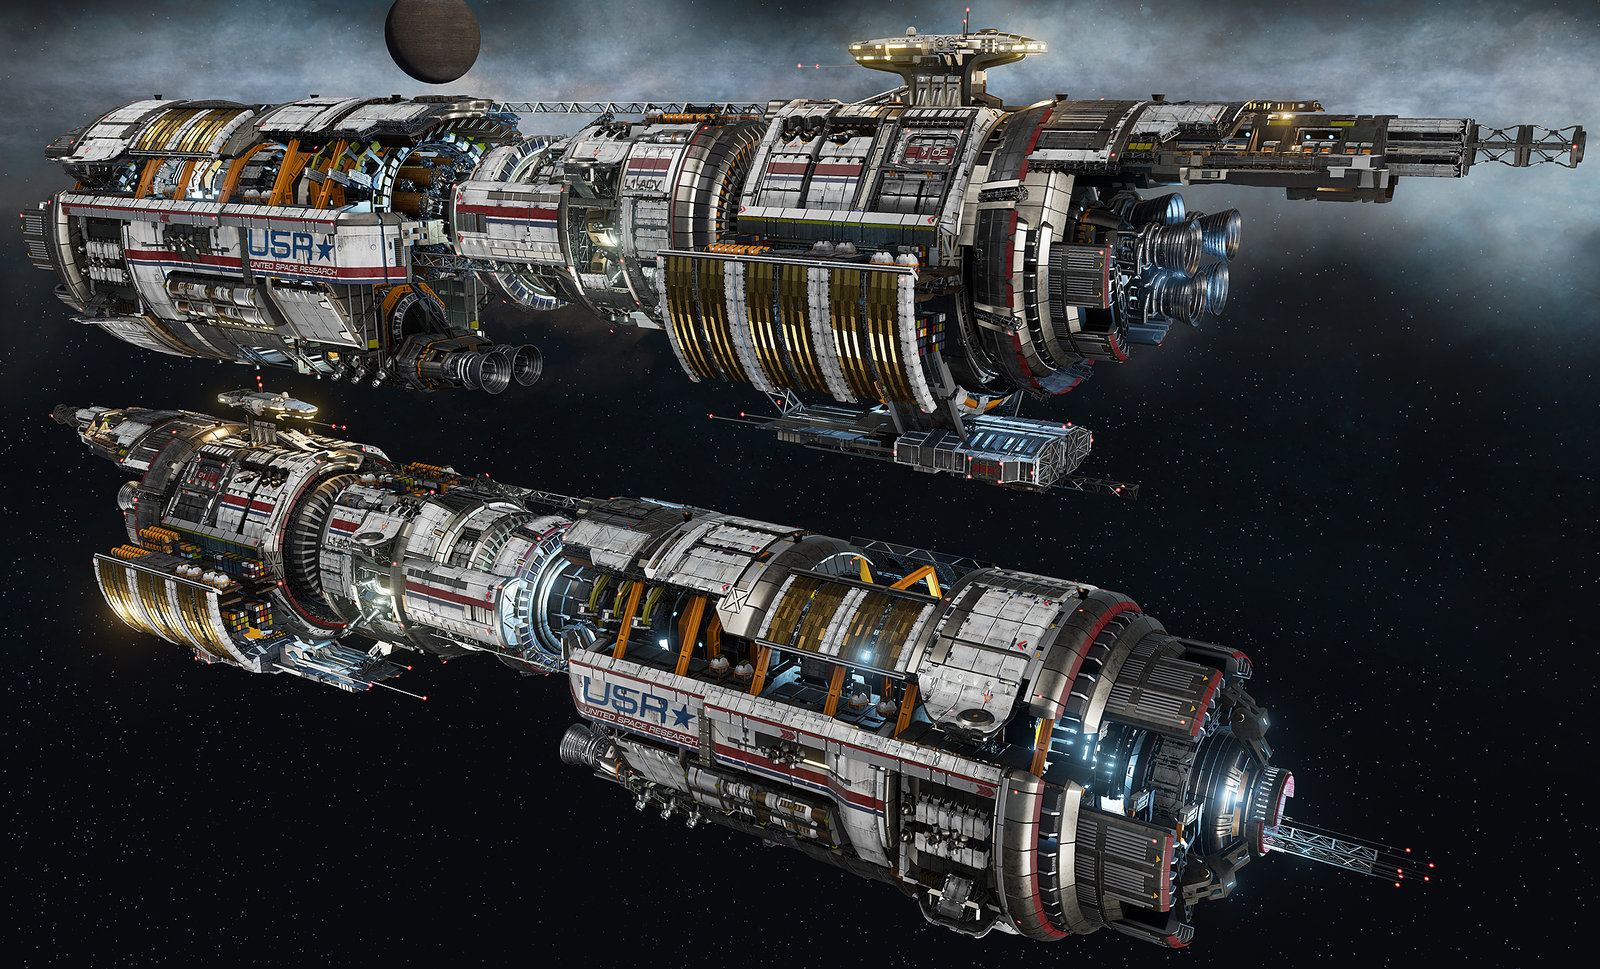 USR "Pioneer" - Fractured Space